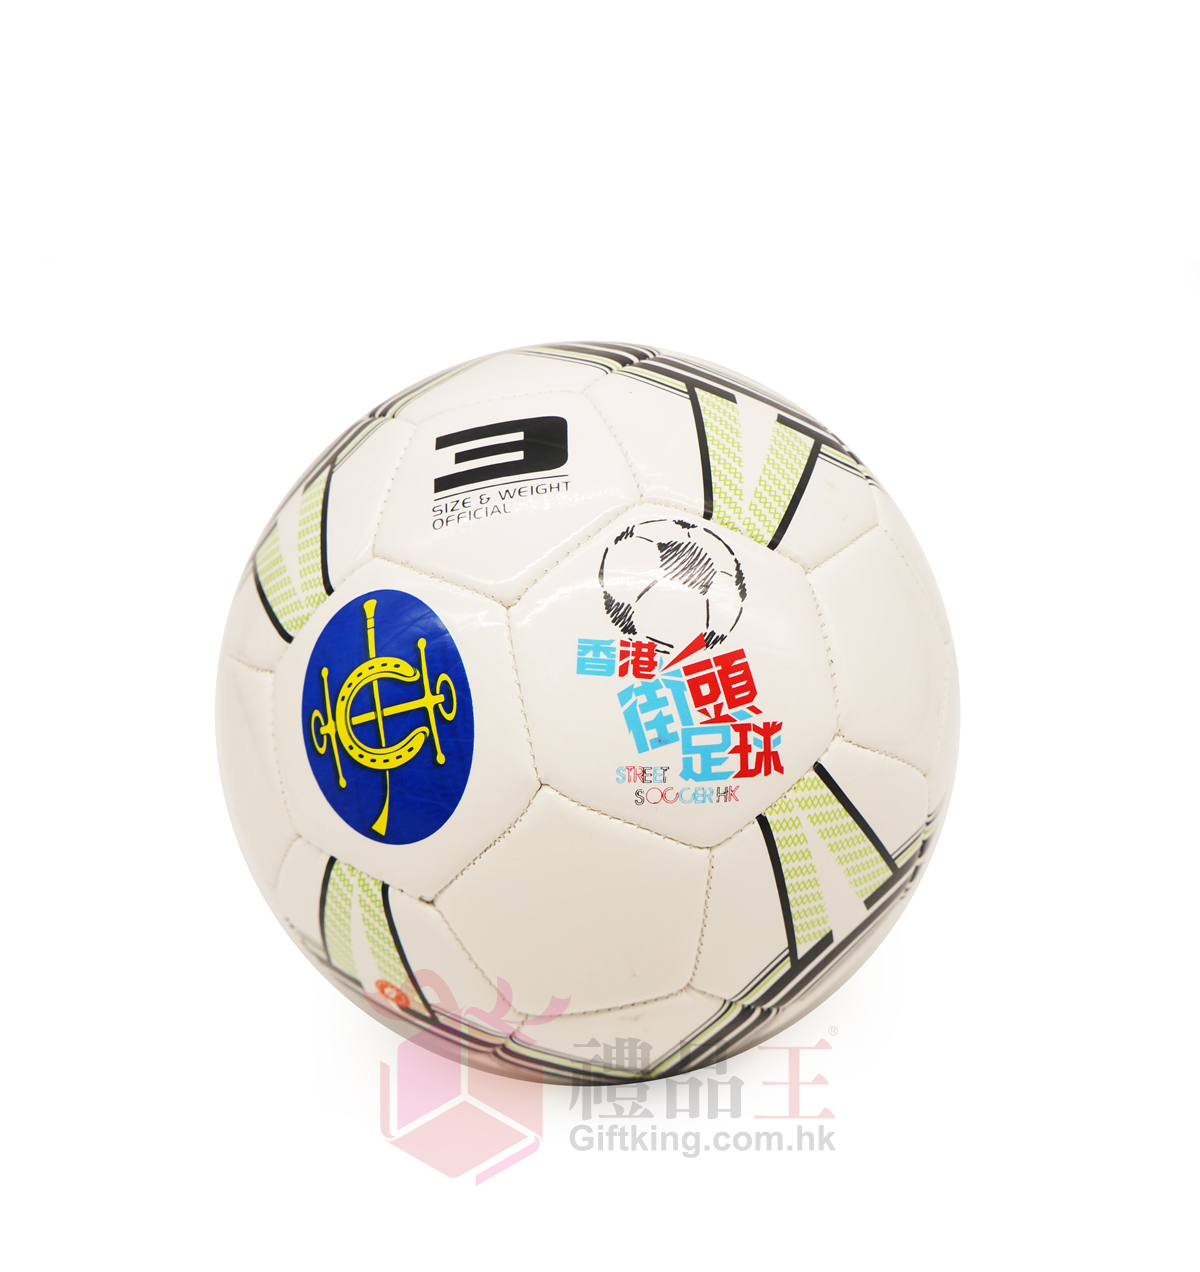 Hong Kong Jockey Club sponsors street soccer HK football (Sports gifts)